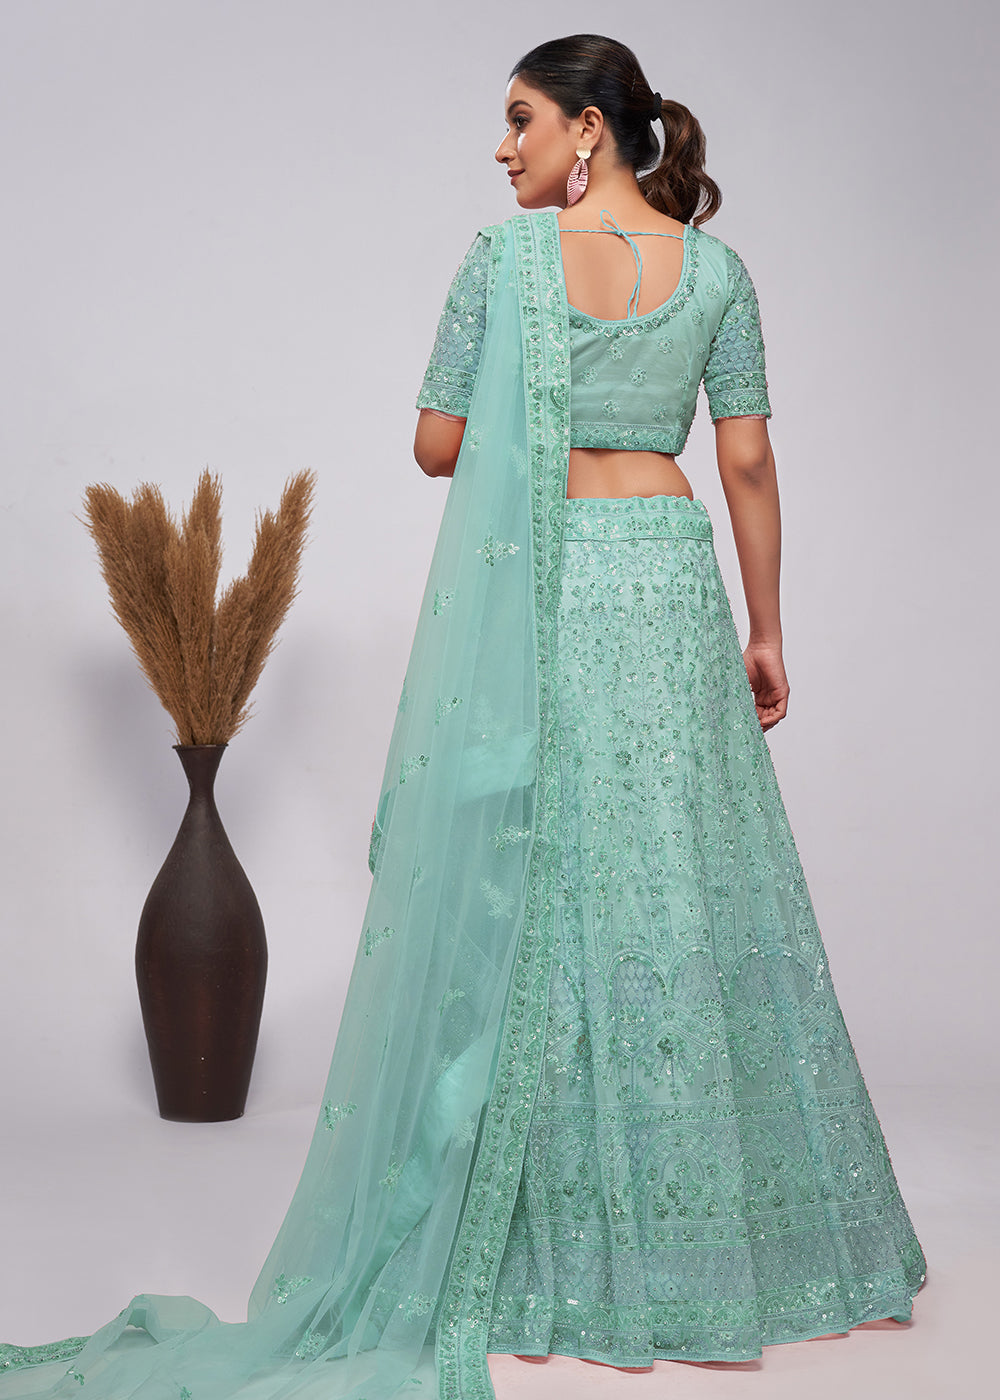 Buy Now Designer Sky Blue Floral Embroidered Bridal Lehenga Choli Online in USA, UK, Canada & Worldwide at Empress Clothing. 